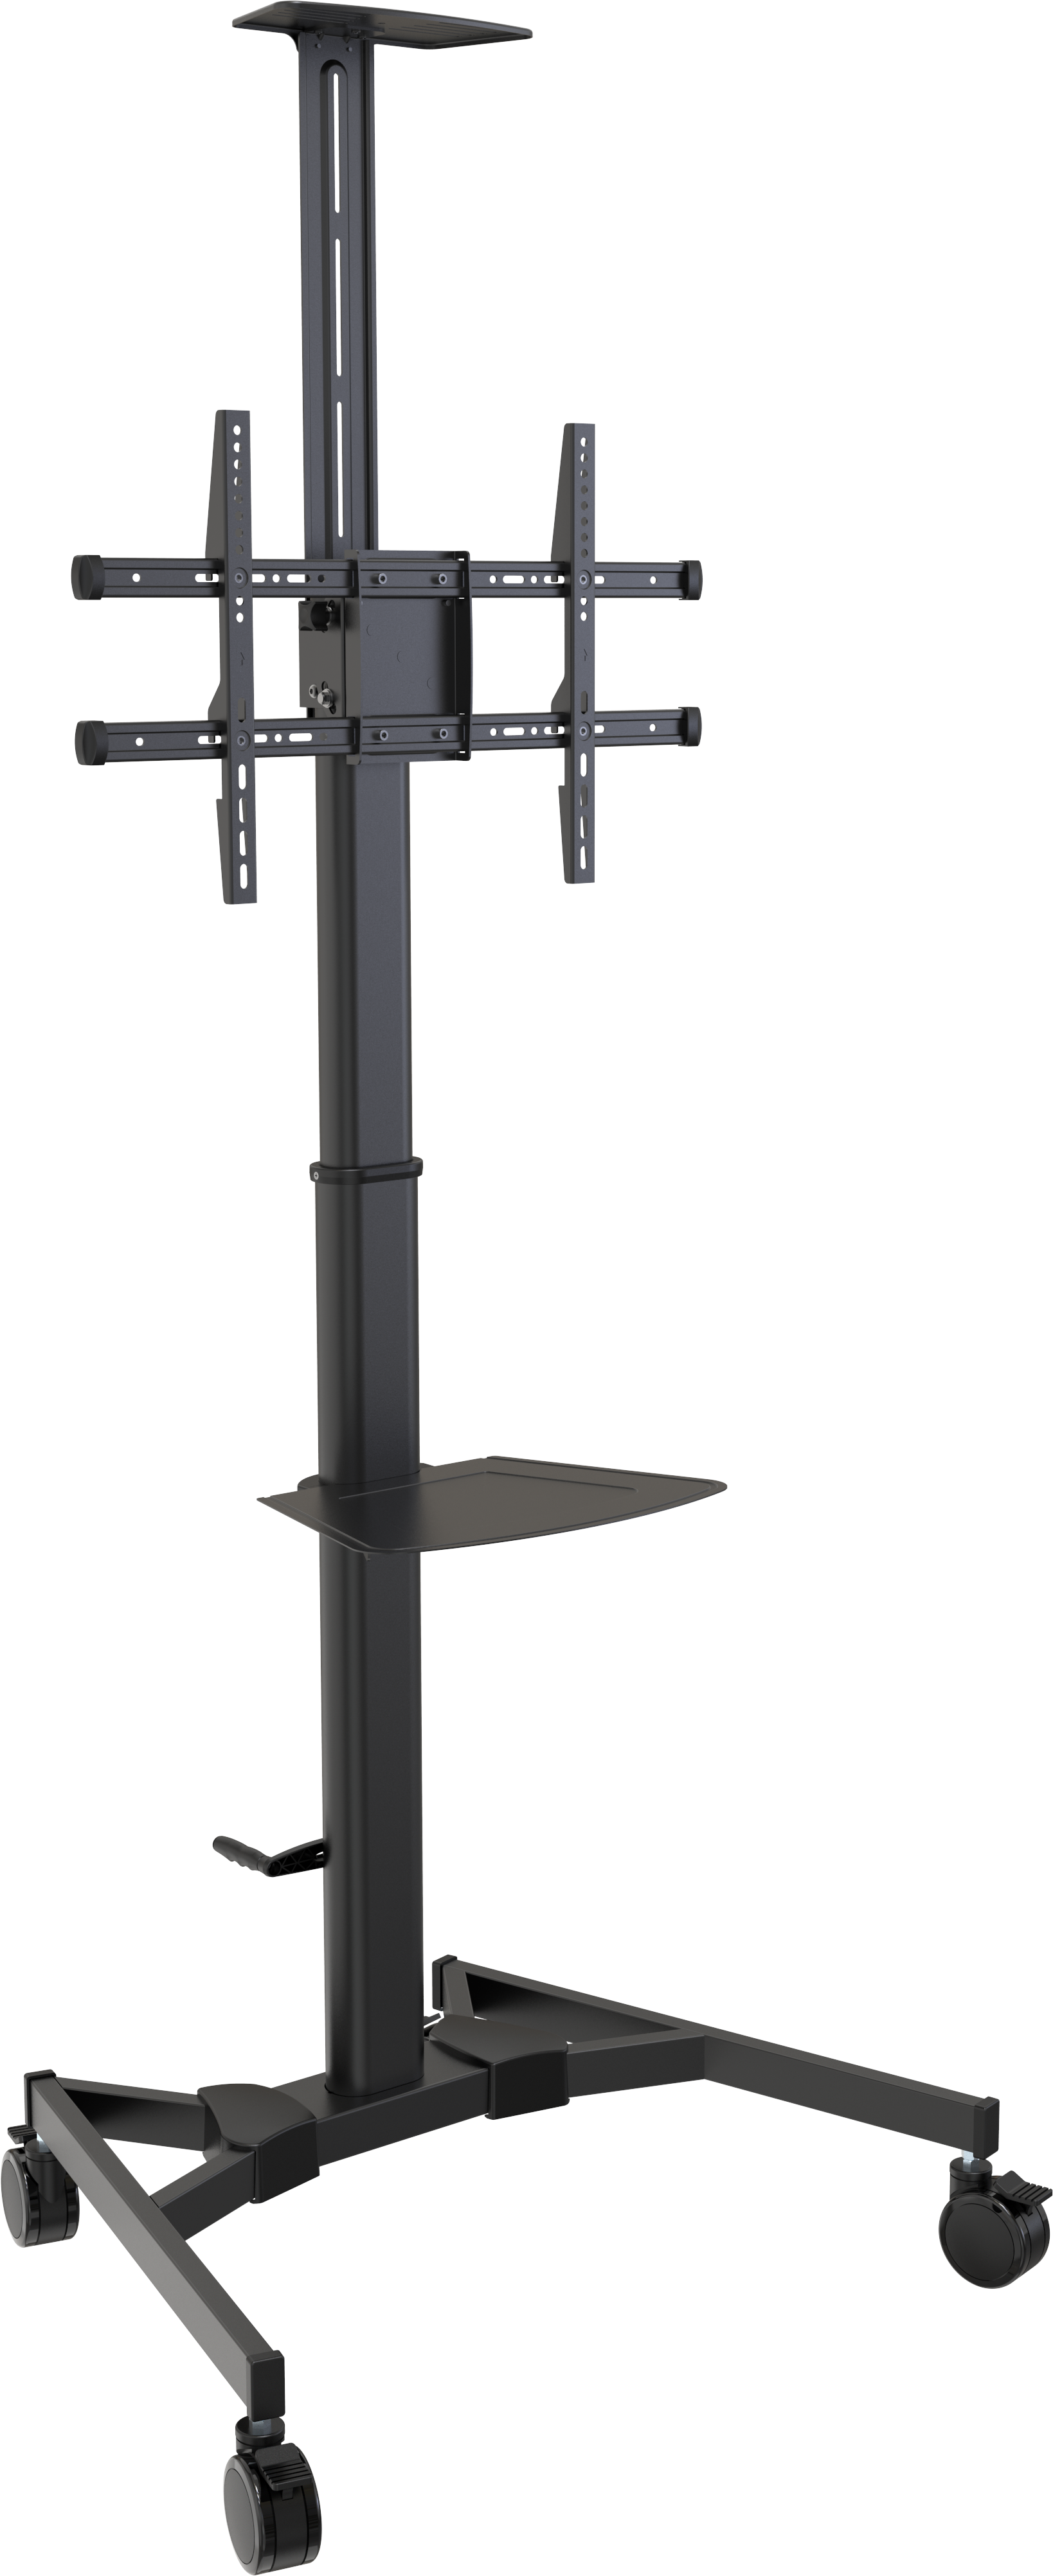 An image showing Carro para pantallas ajustable en altura para 45 kg